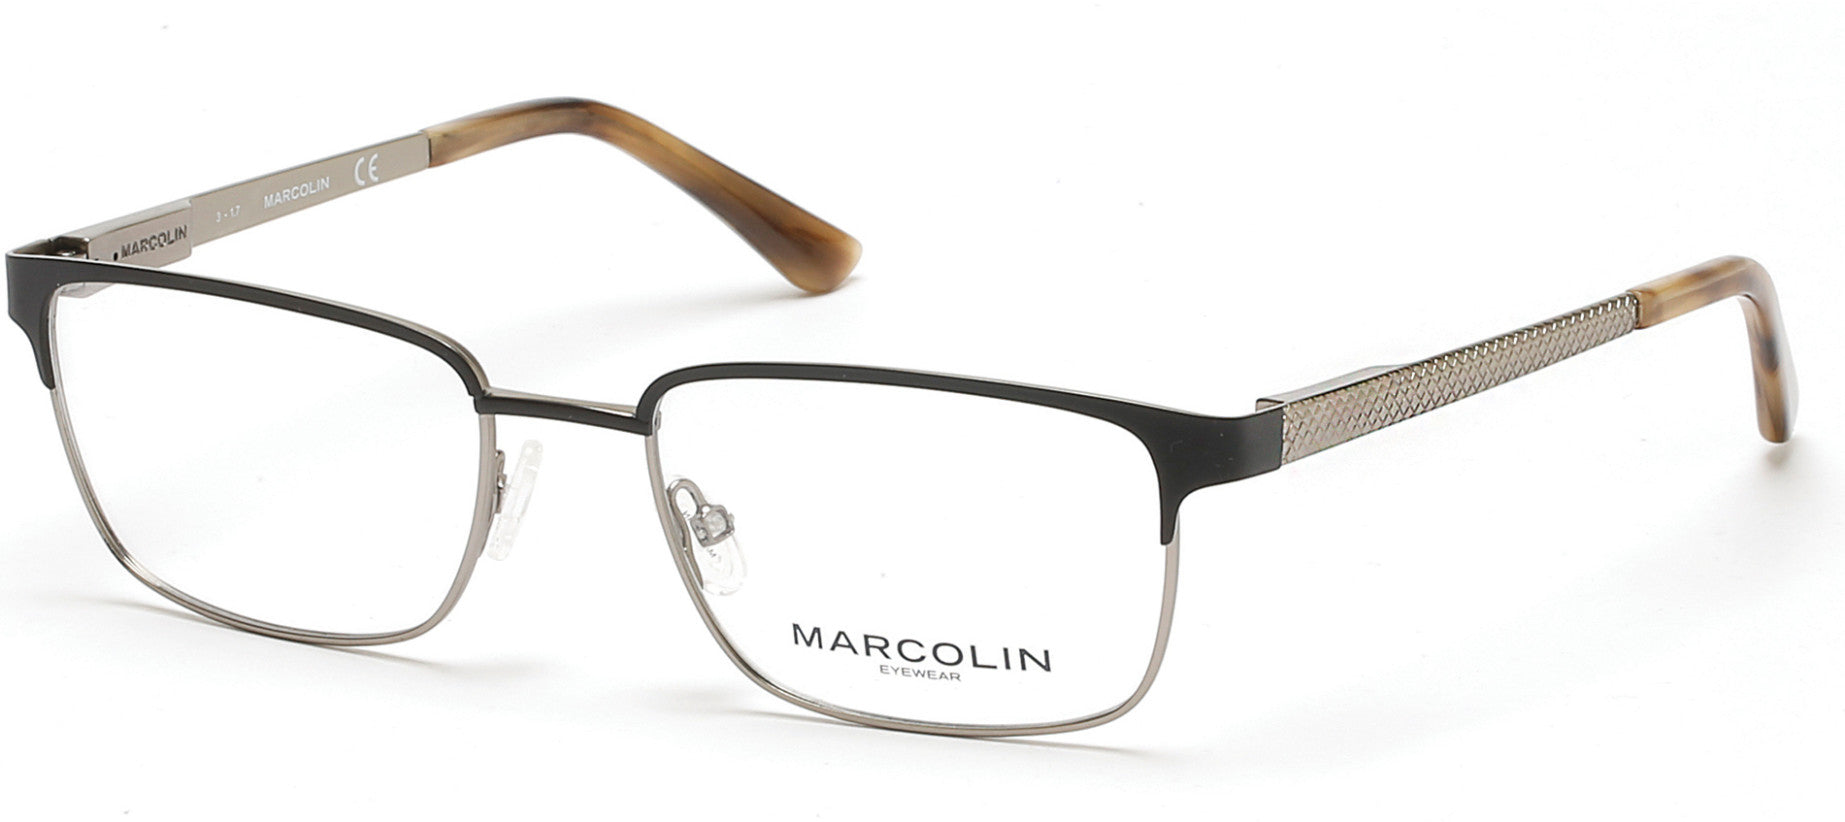 Marcolin MA3000 Eyeglasses 005-005 - Black/other